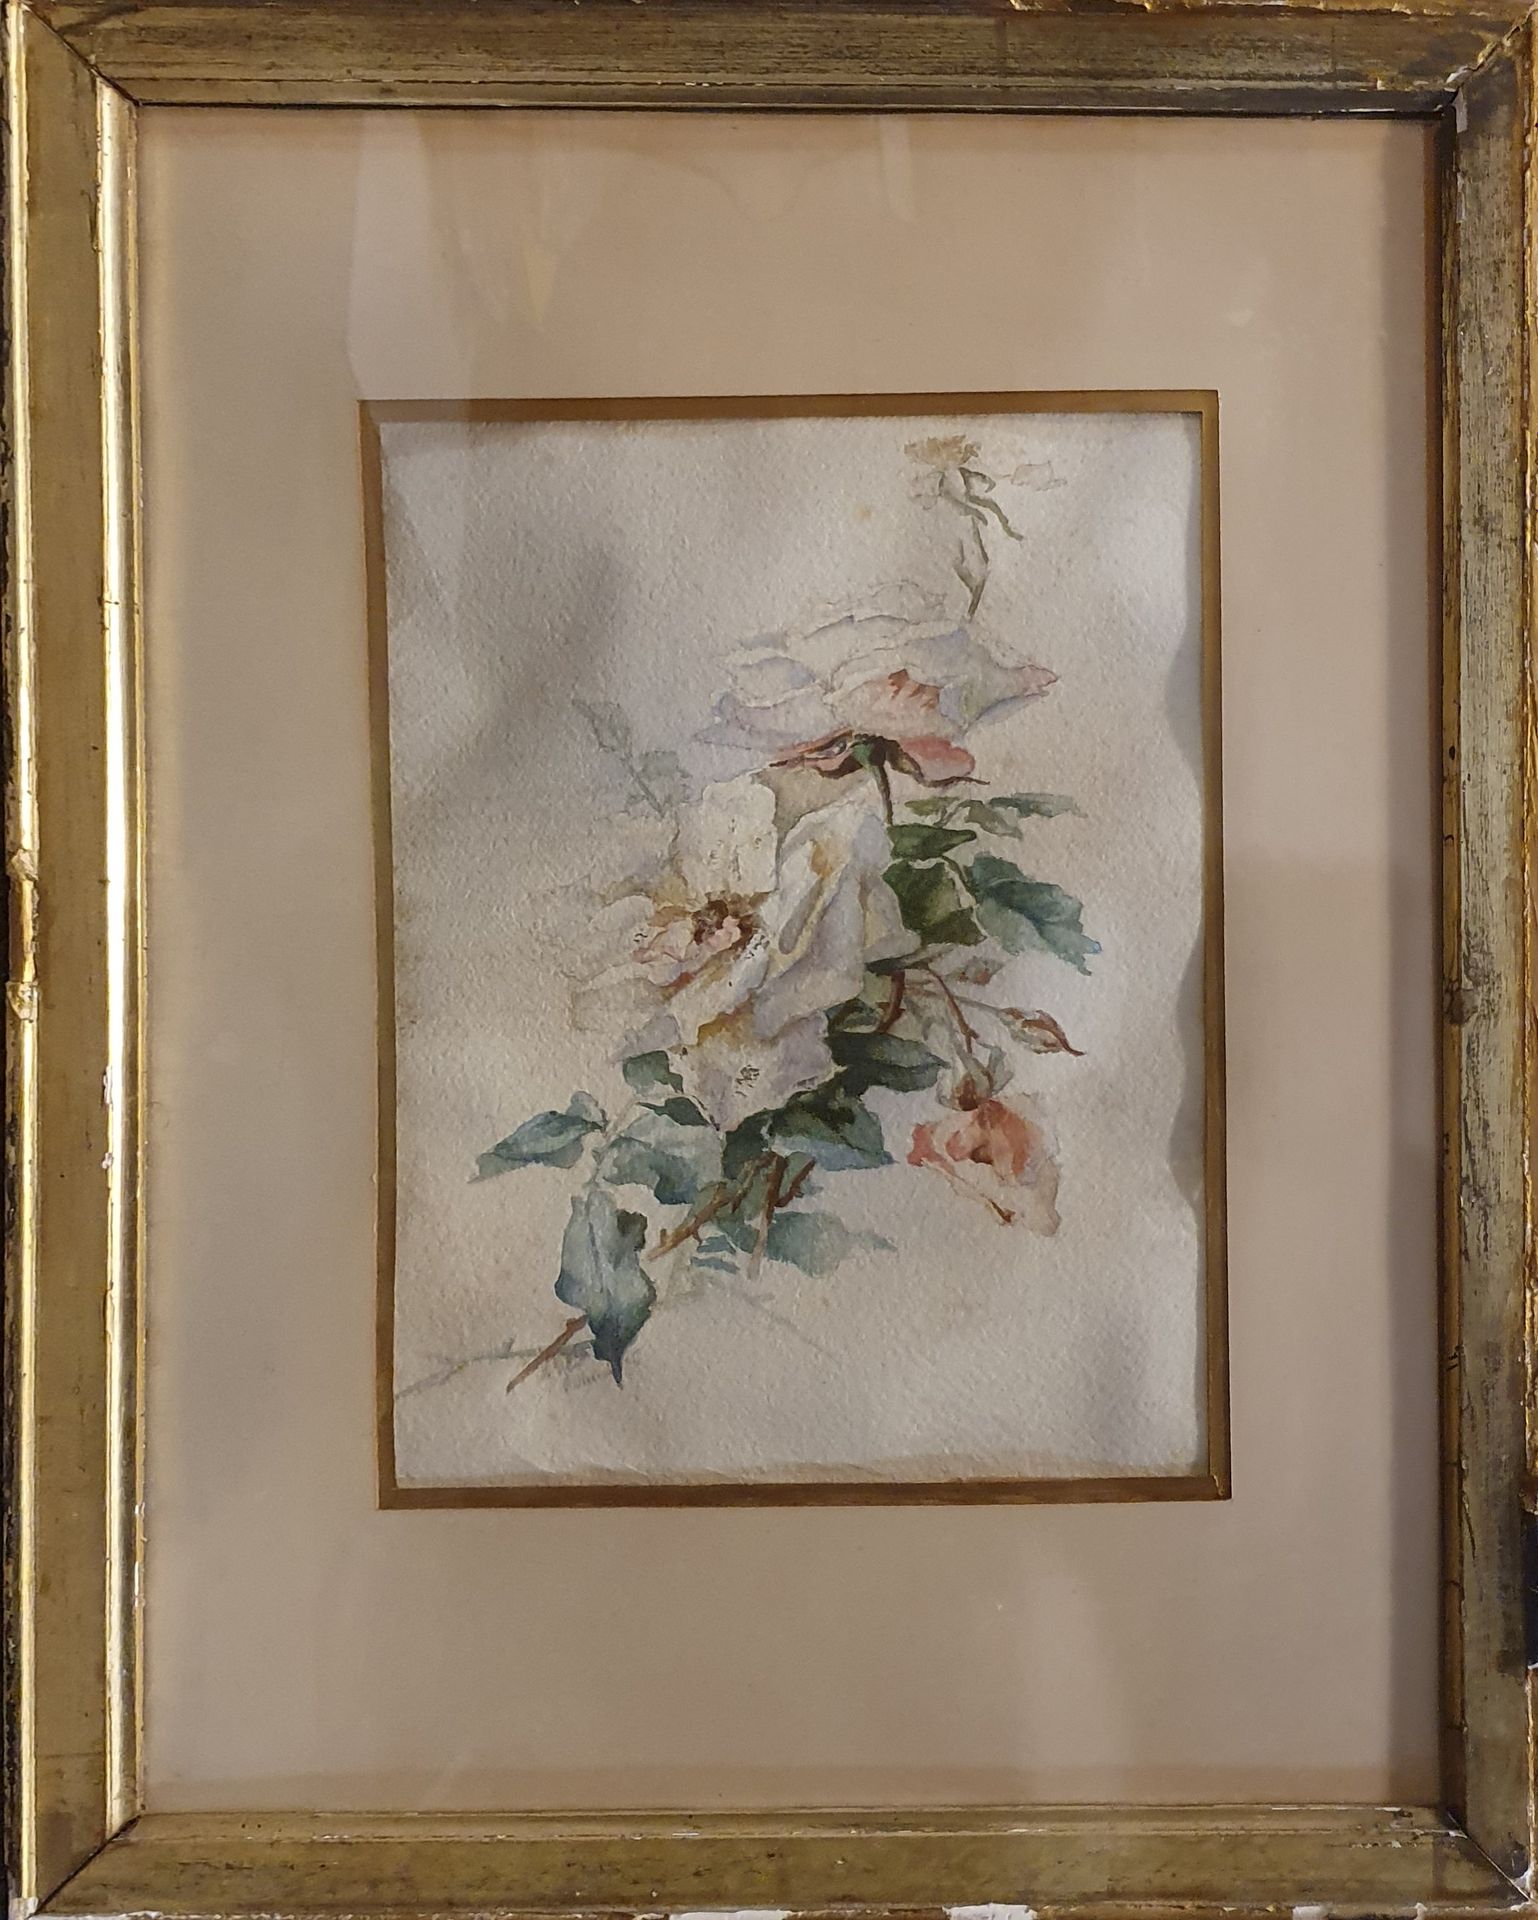 Null YVERT Marie Hector (1808-?)

flowers, november 96

Watercolour on paper, si&hellip;